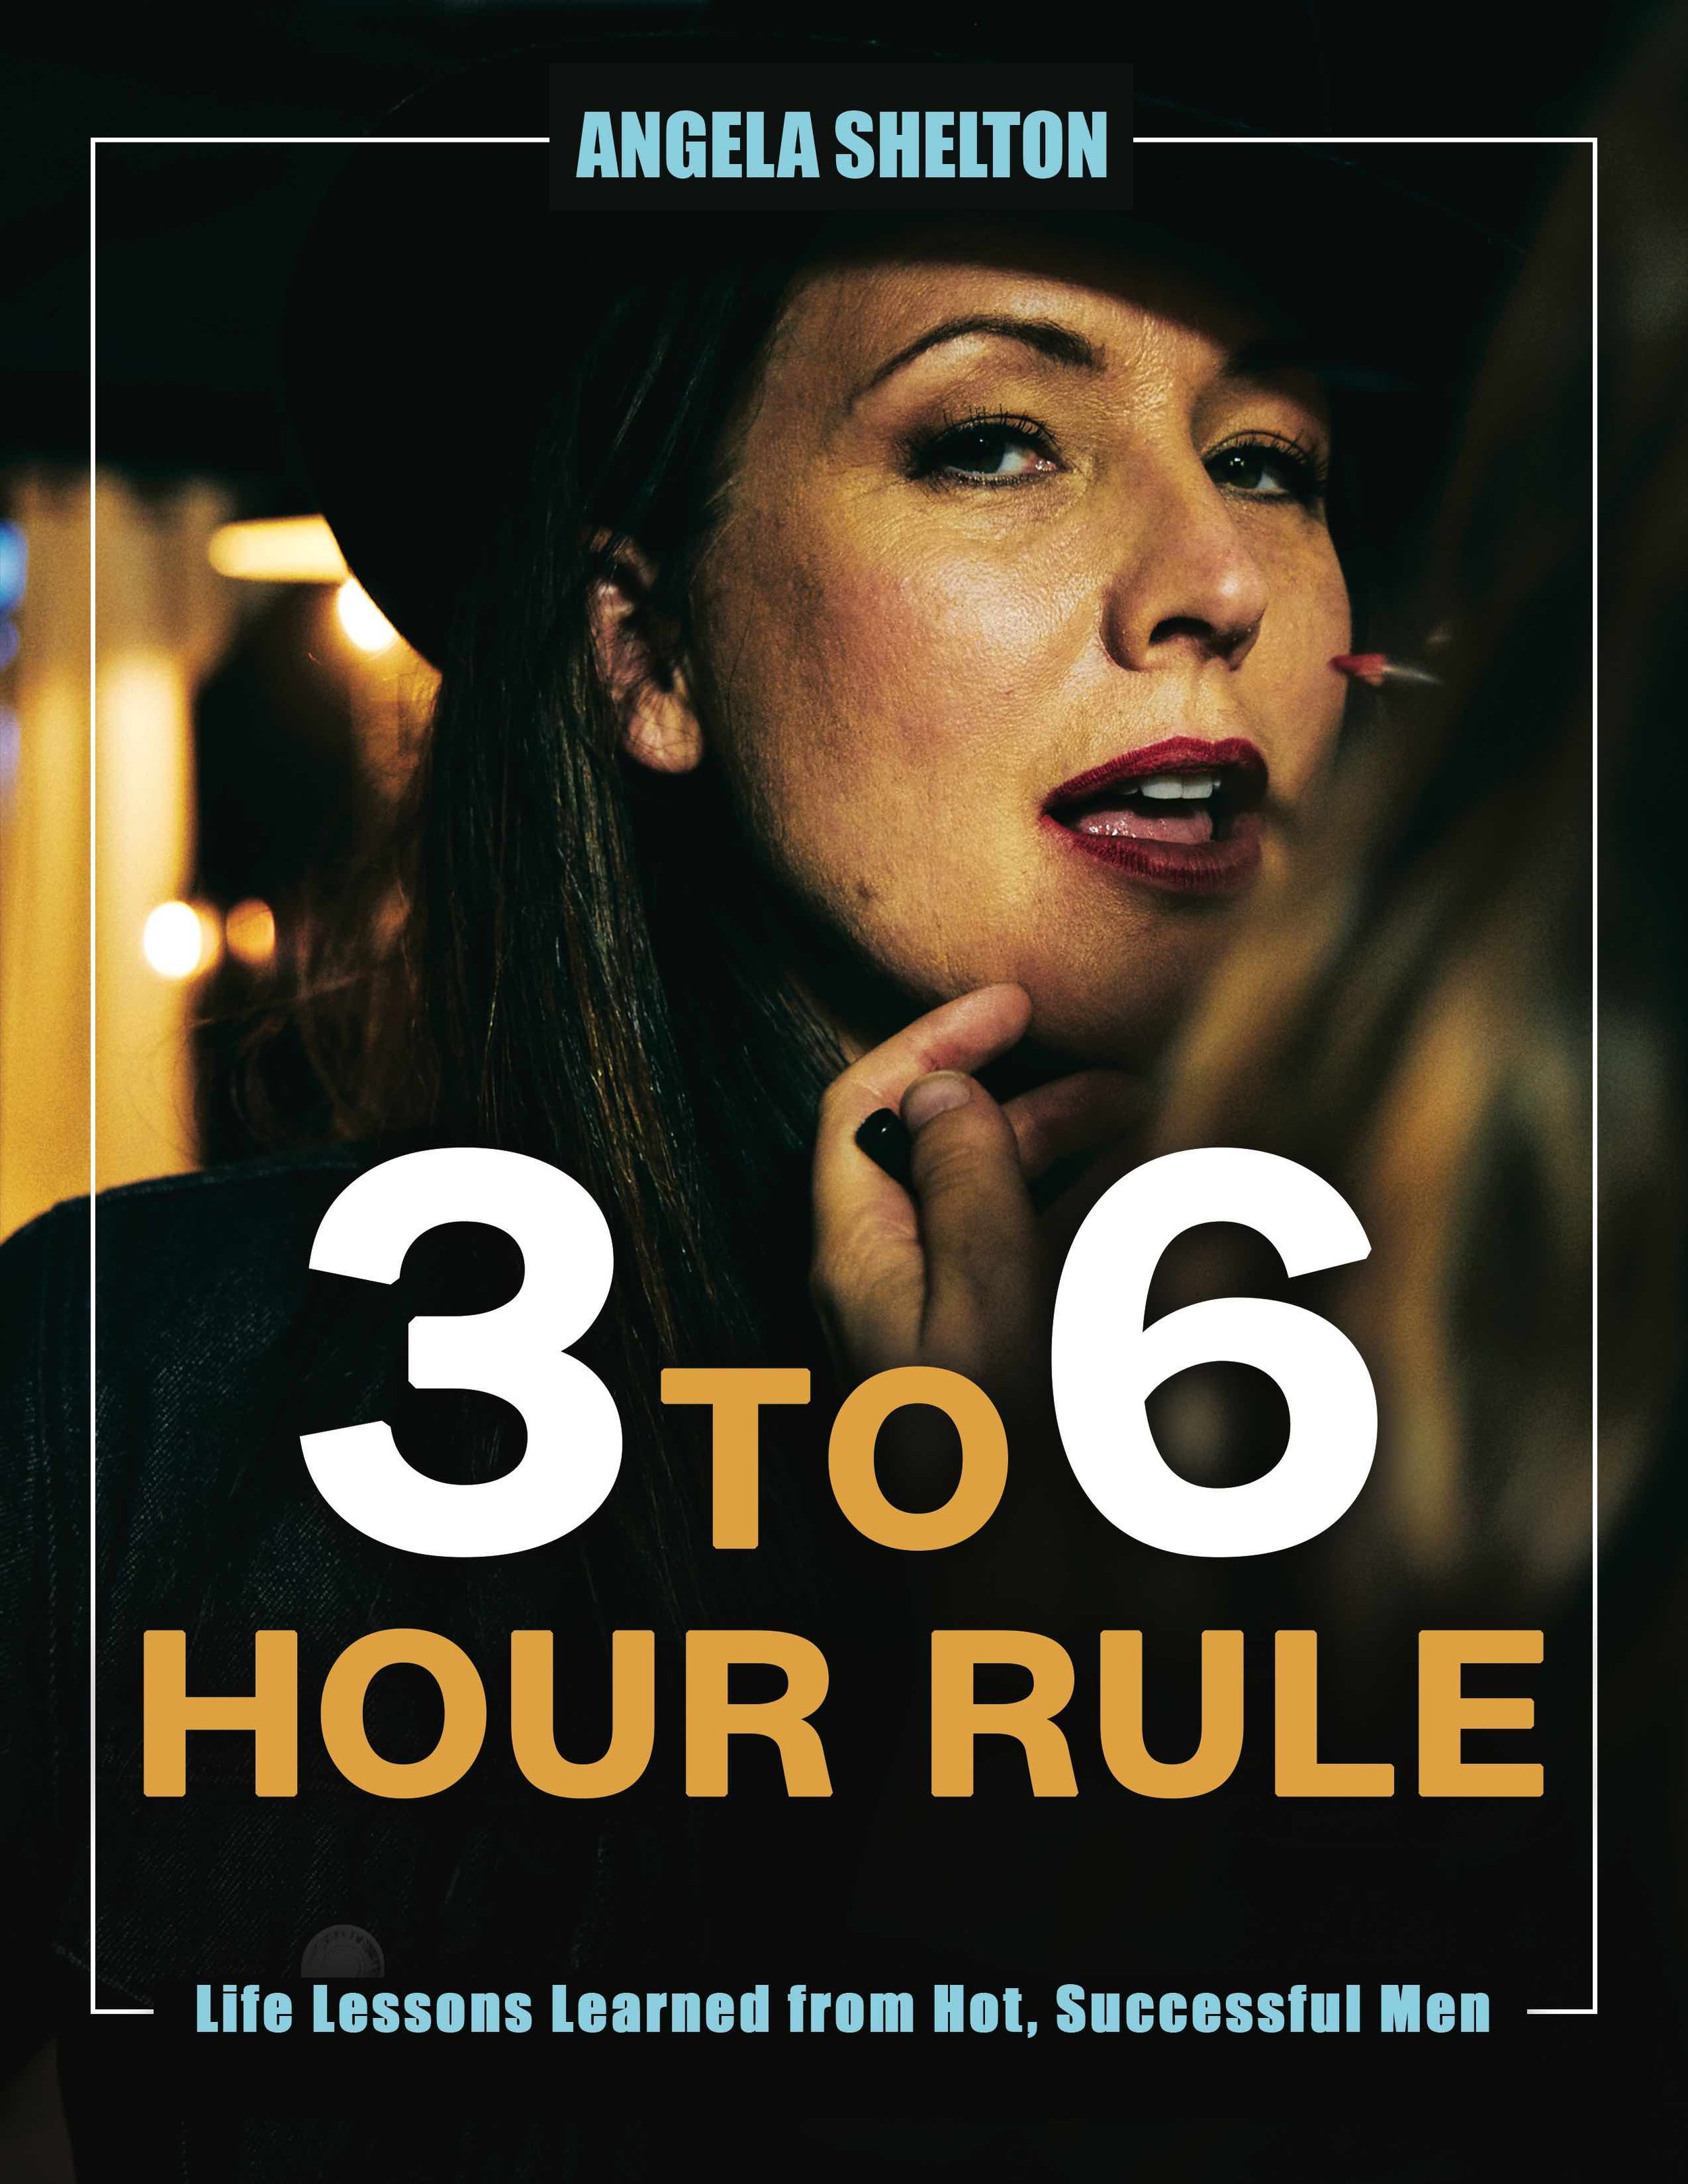 3-6 hour rule book cover 2.jpg